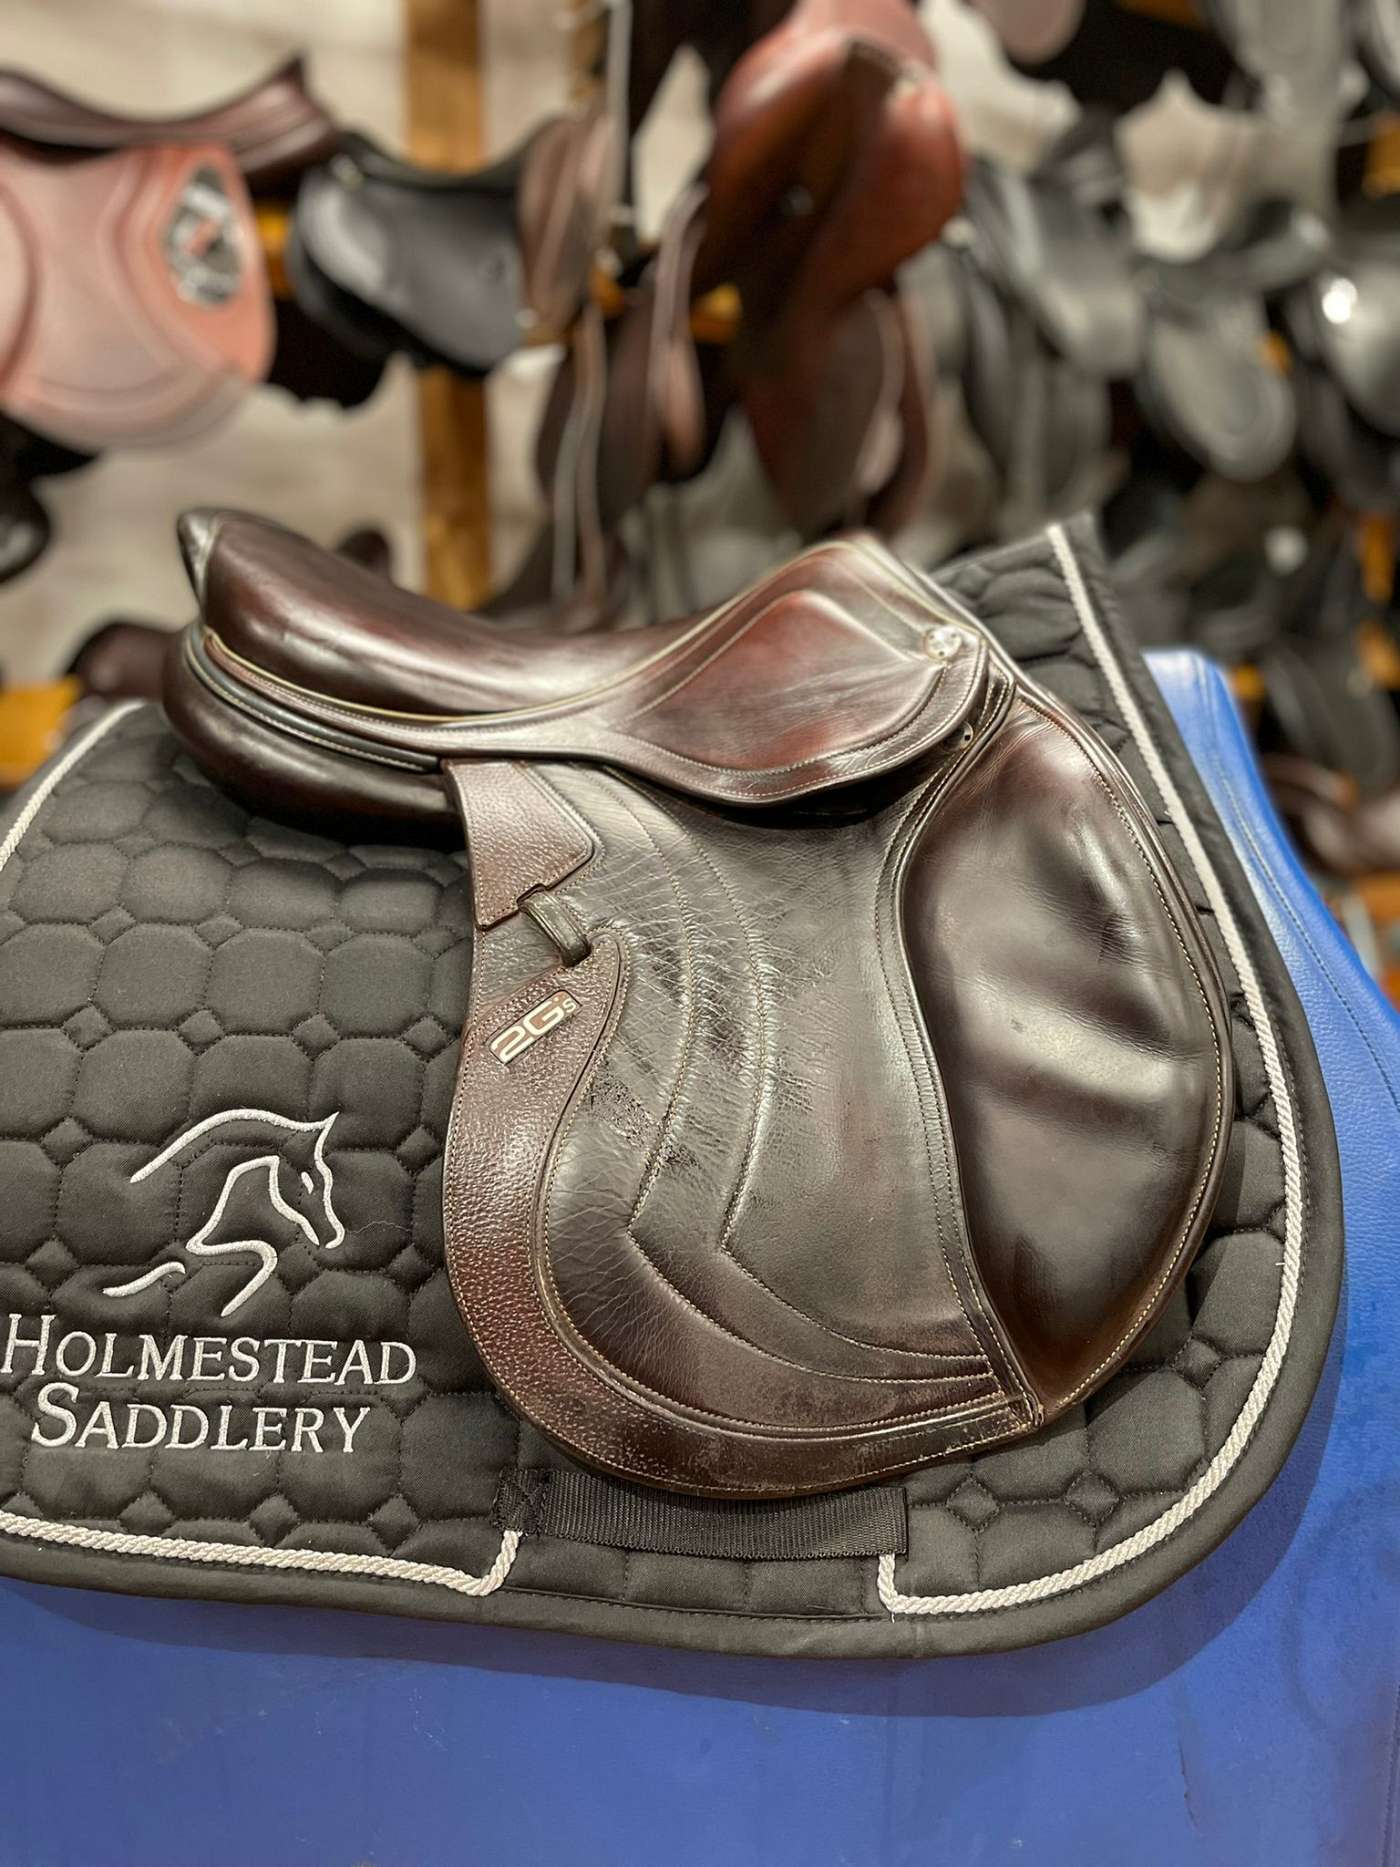 Holmestead Saddlery, Best Tack Store, Equestrian Shop